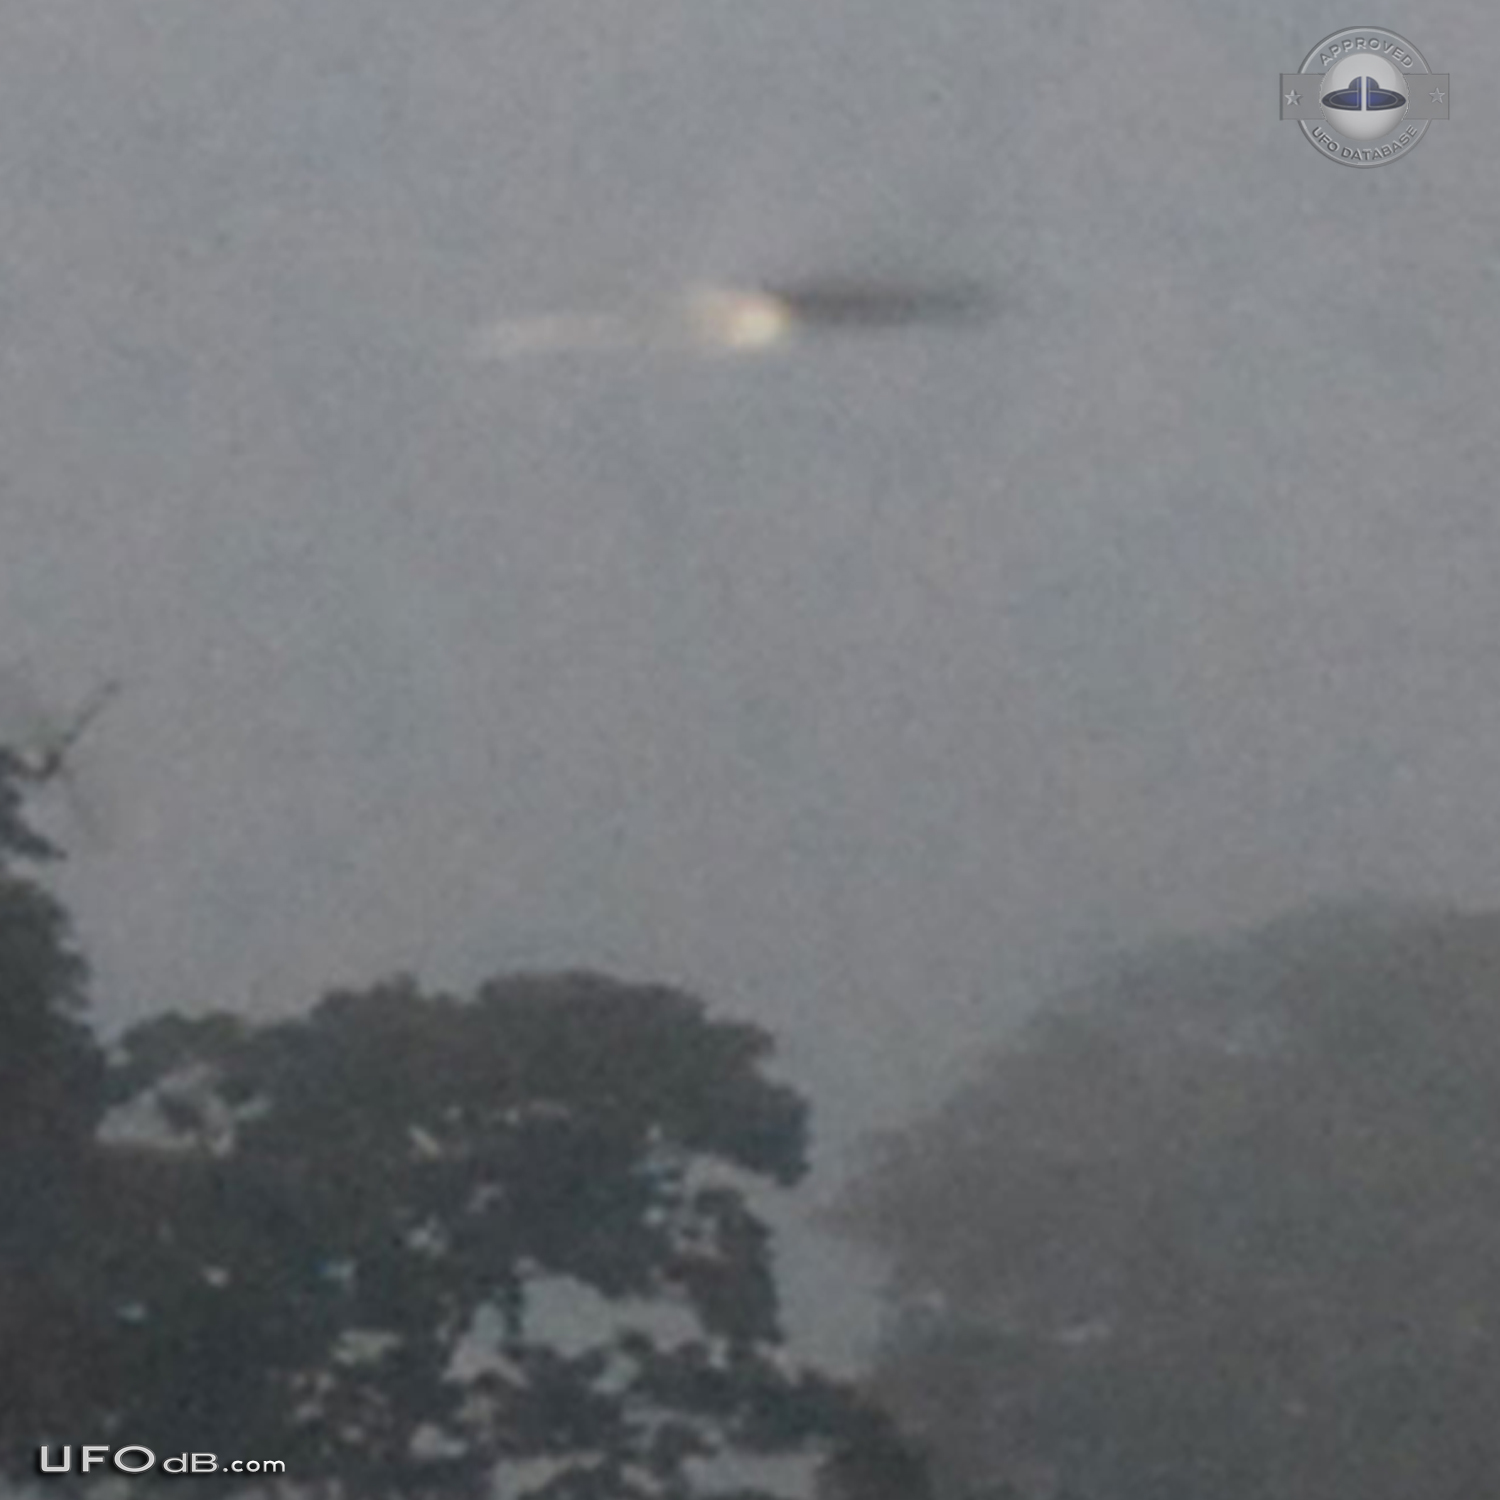 Cattle farm picture reveals passing saucer UFO in Portugesa, Venezuela UFO Picture #484-3